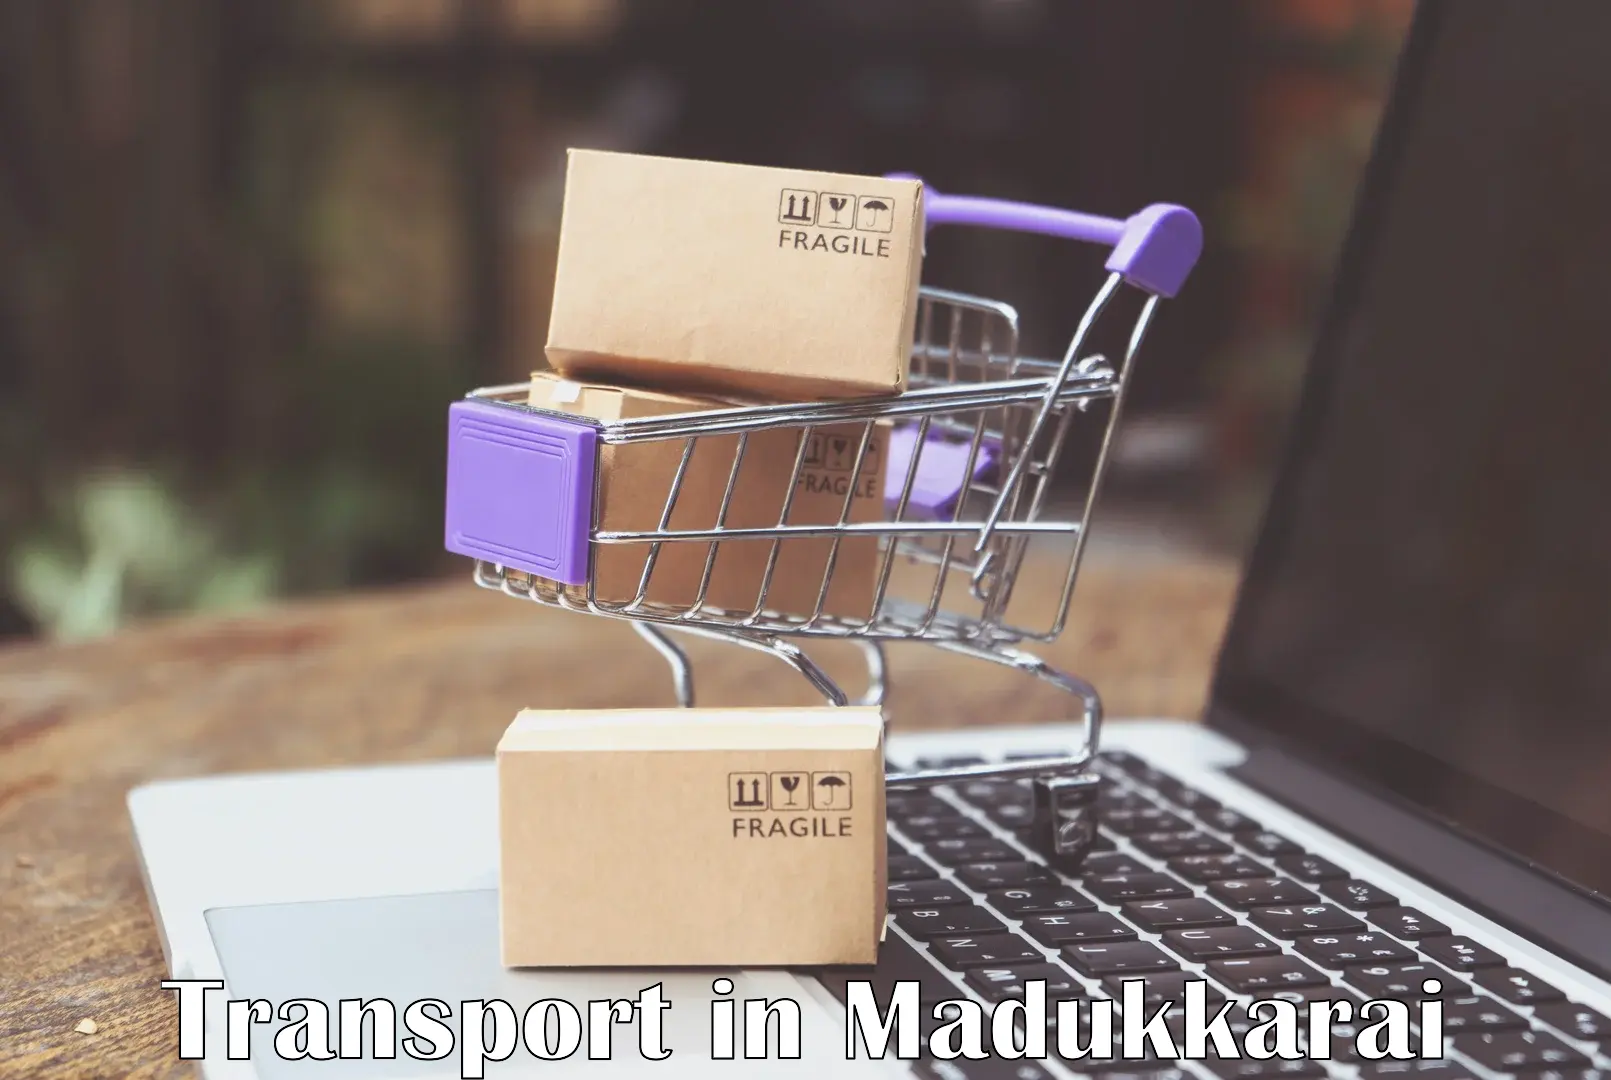 Express transport services in Madukkarai